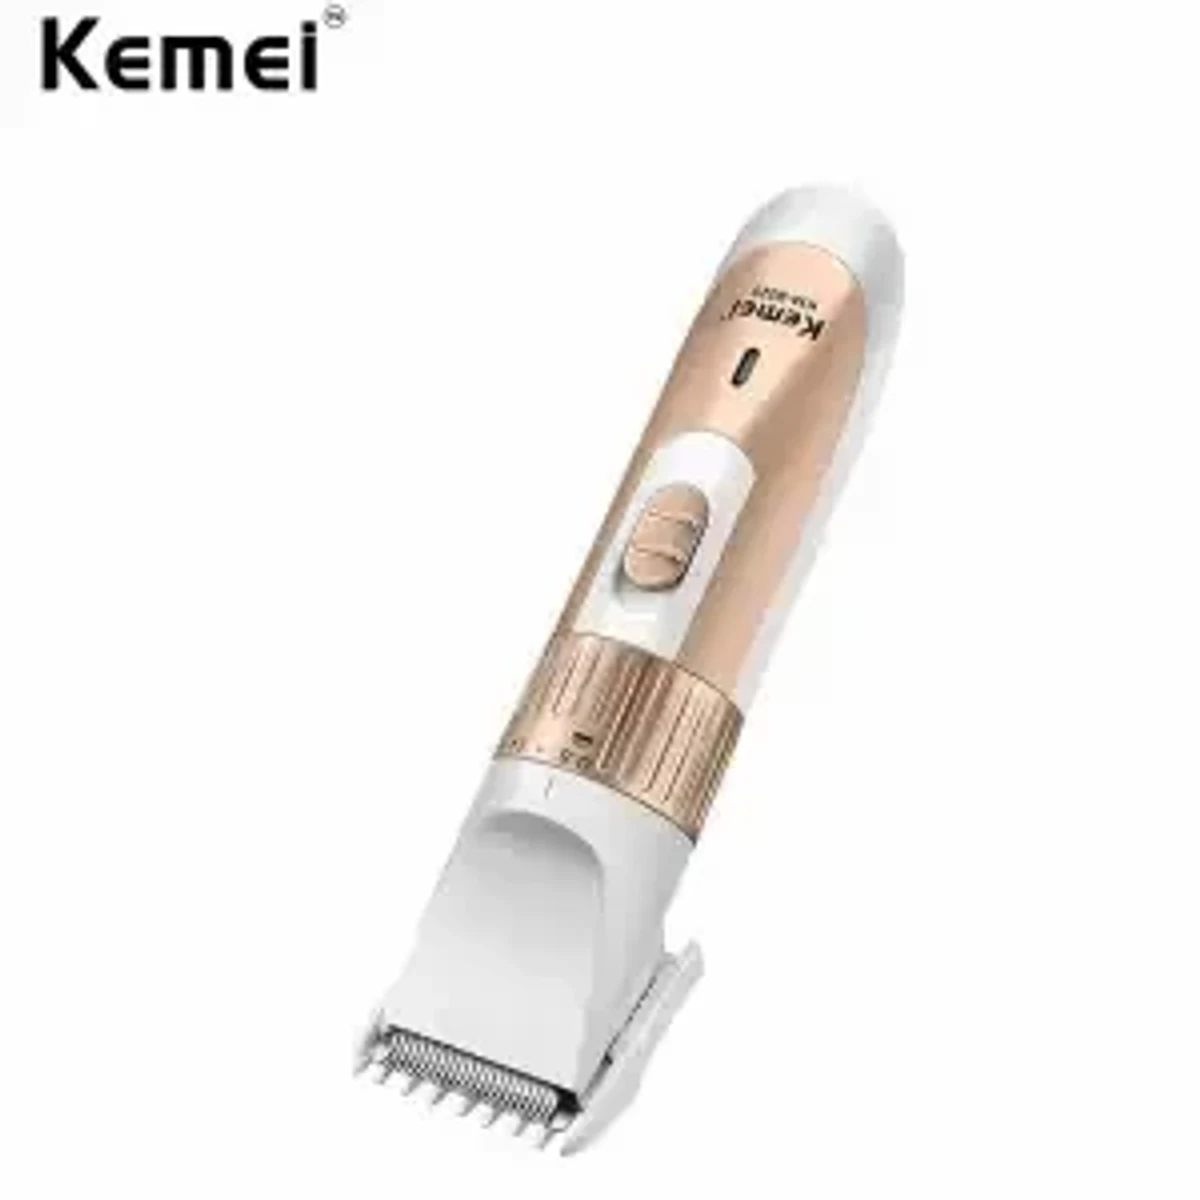 Kemei KM- (3 in 1) Shaver, Trimmer